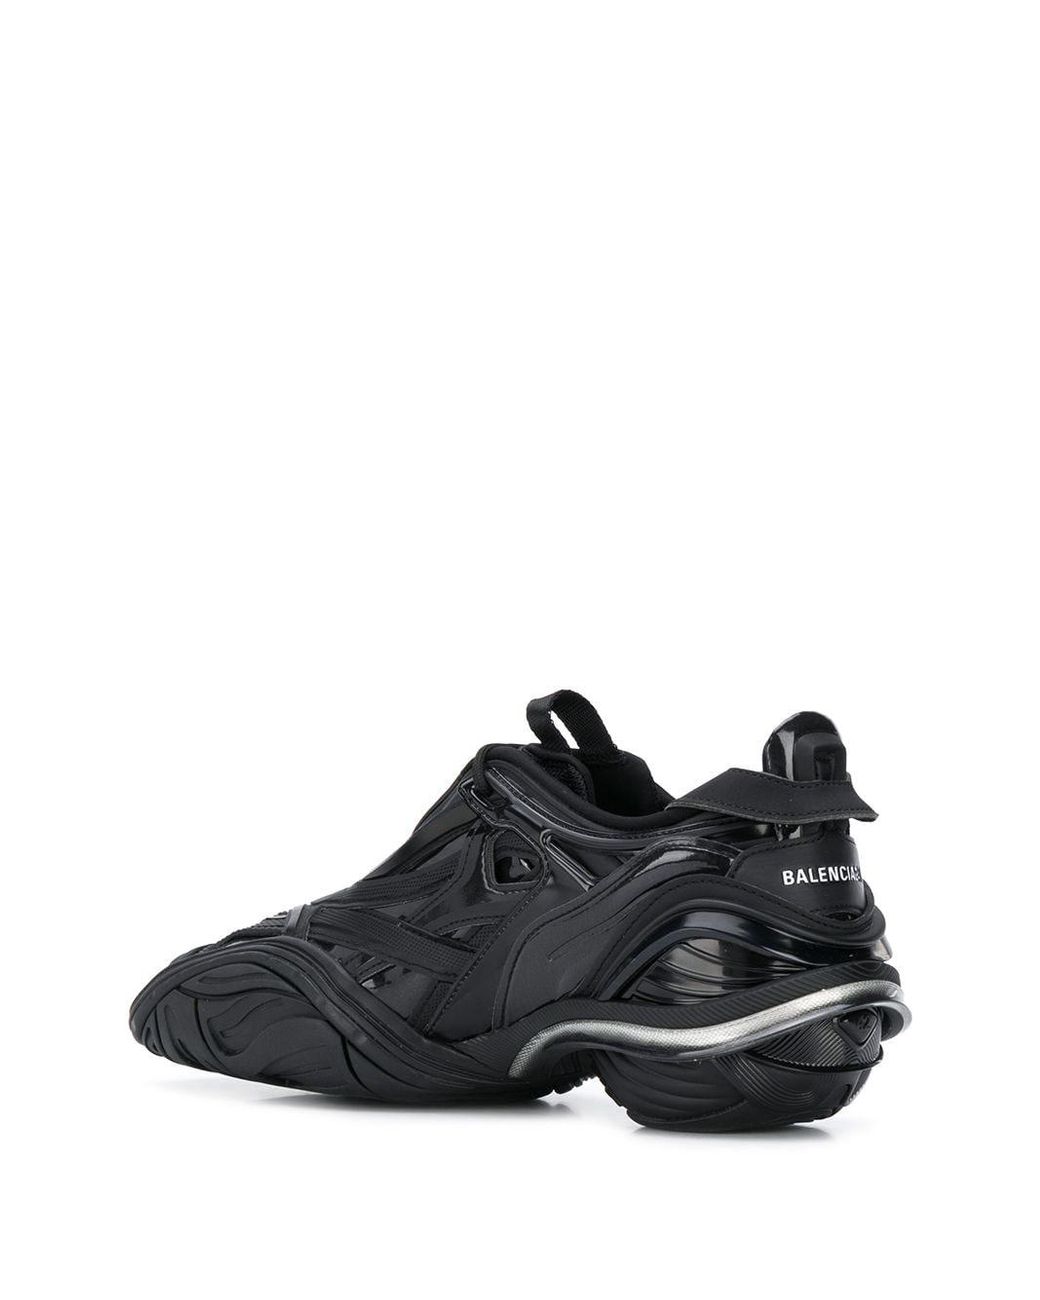 Balenciaga Tyrex Sneakers in Black | Lyst Australia